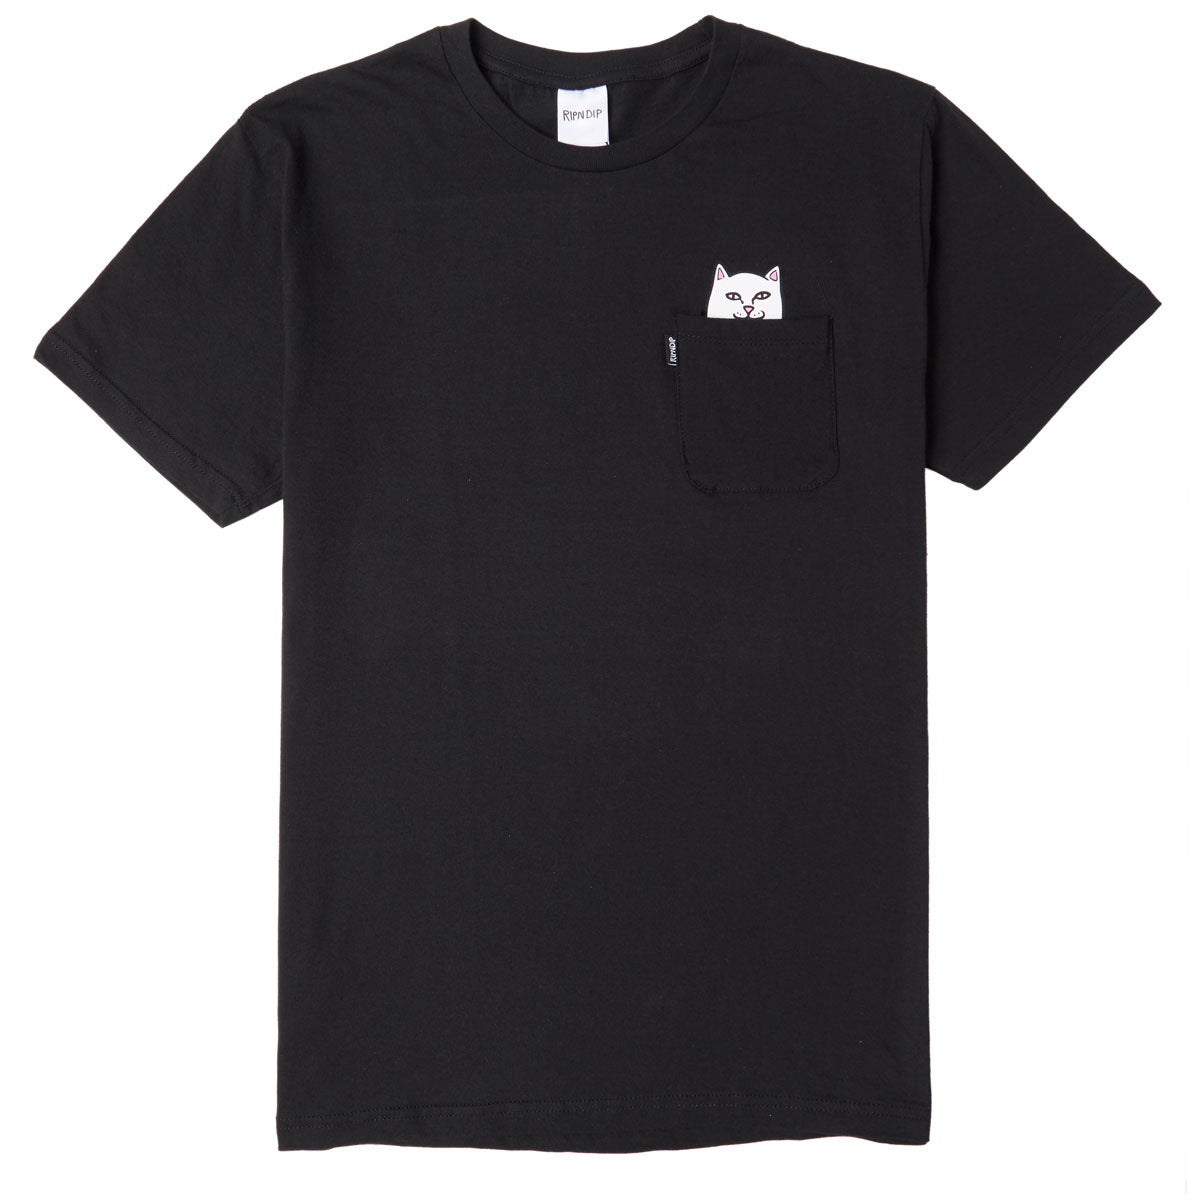 RIPNDIP Lord Nermal Pocket T-Shirt - Black image 1